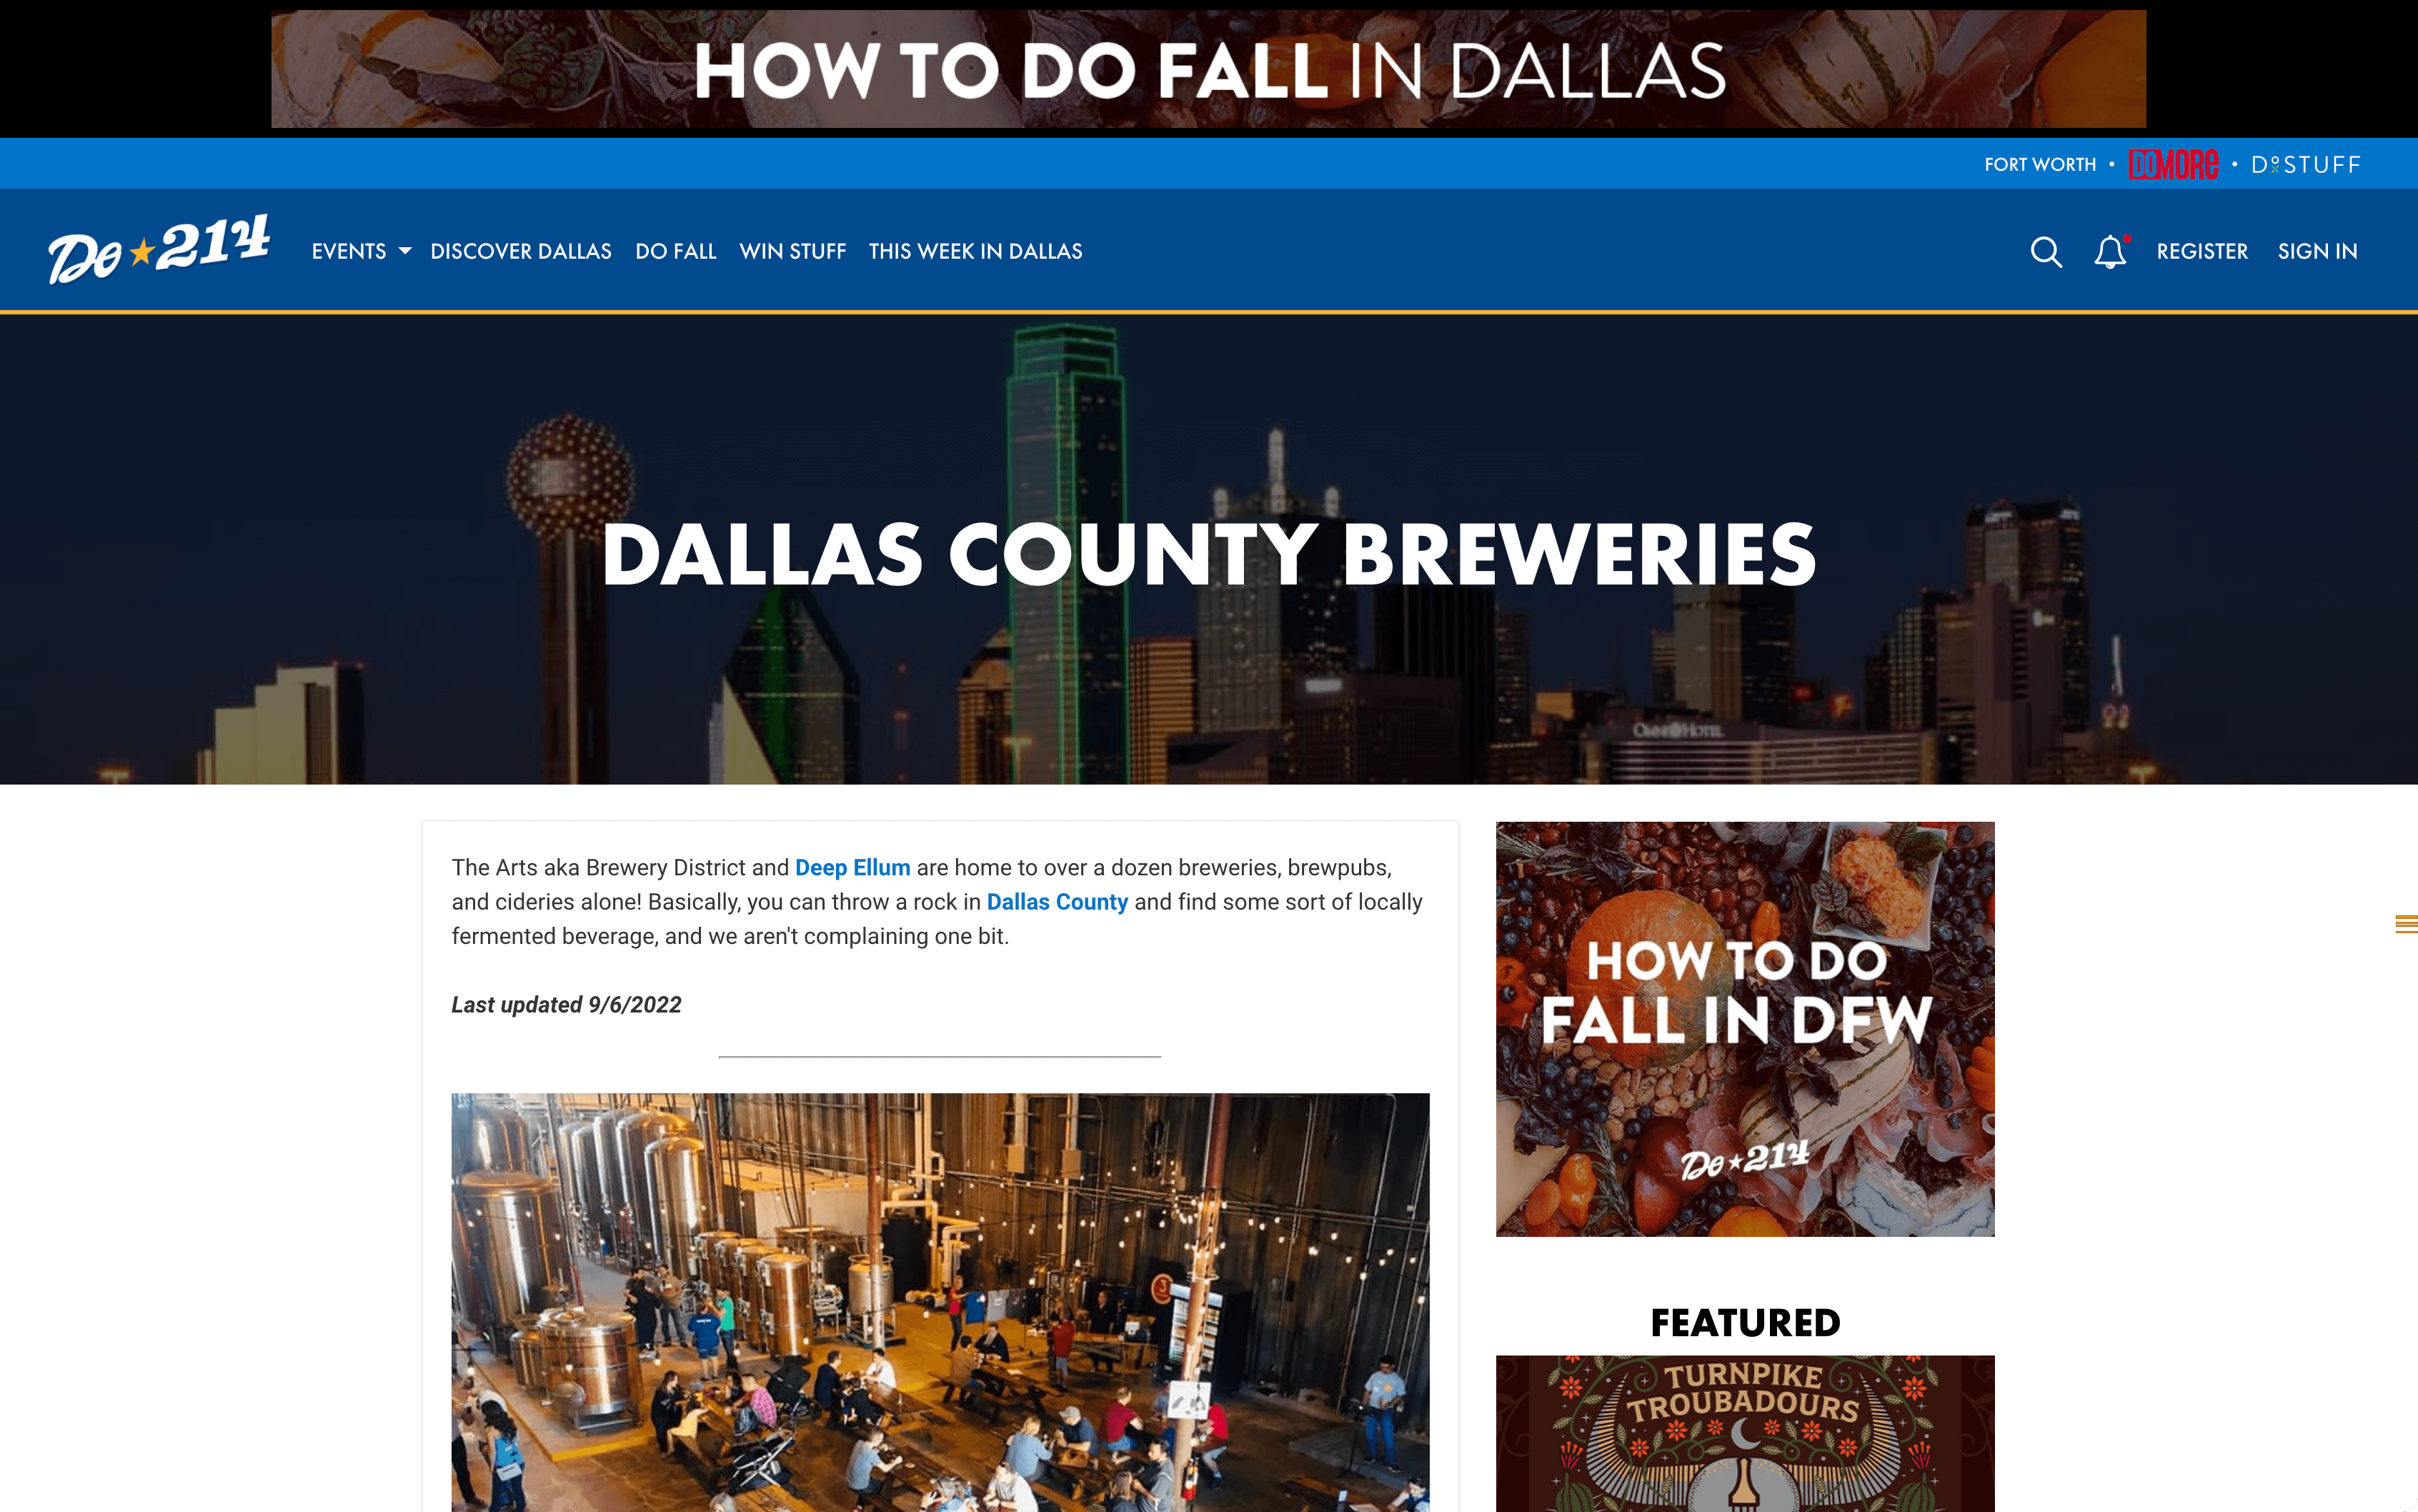 [do214] Dallas County Breweries